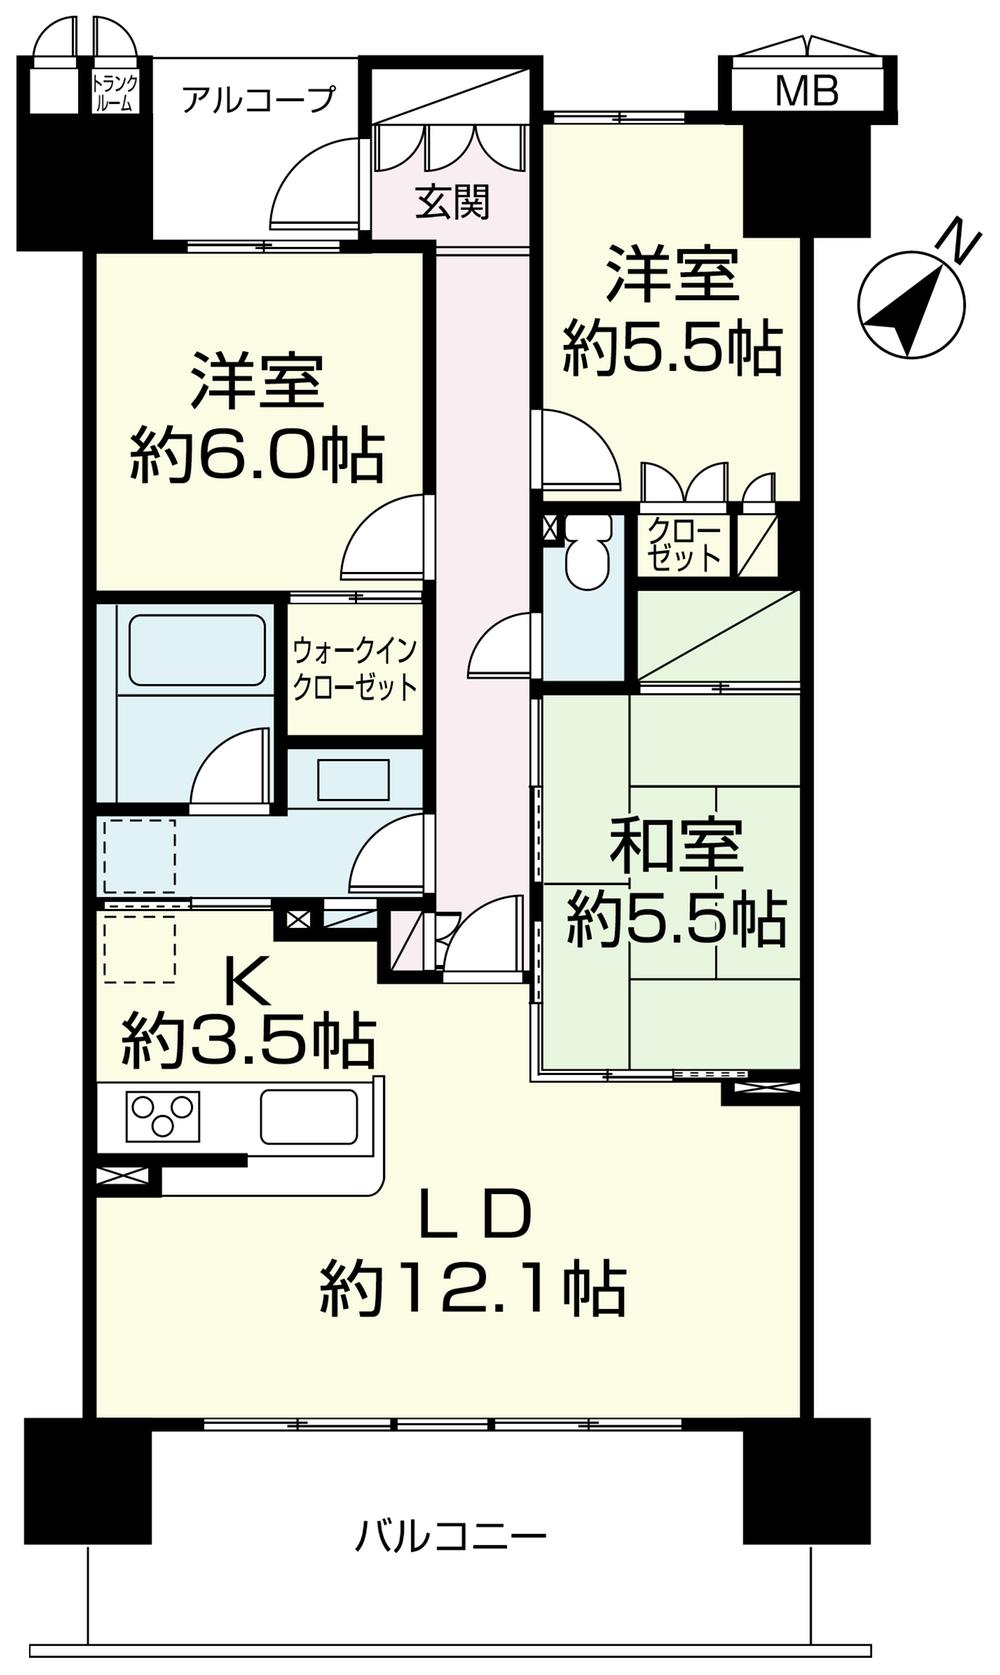 Floor plan. 3LDK, Price 28.8 million yen, Occupied area 75.04 sq m , Balcony area 13 sq m